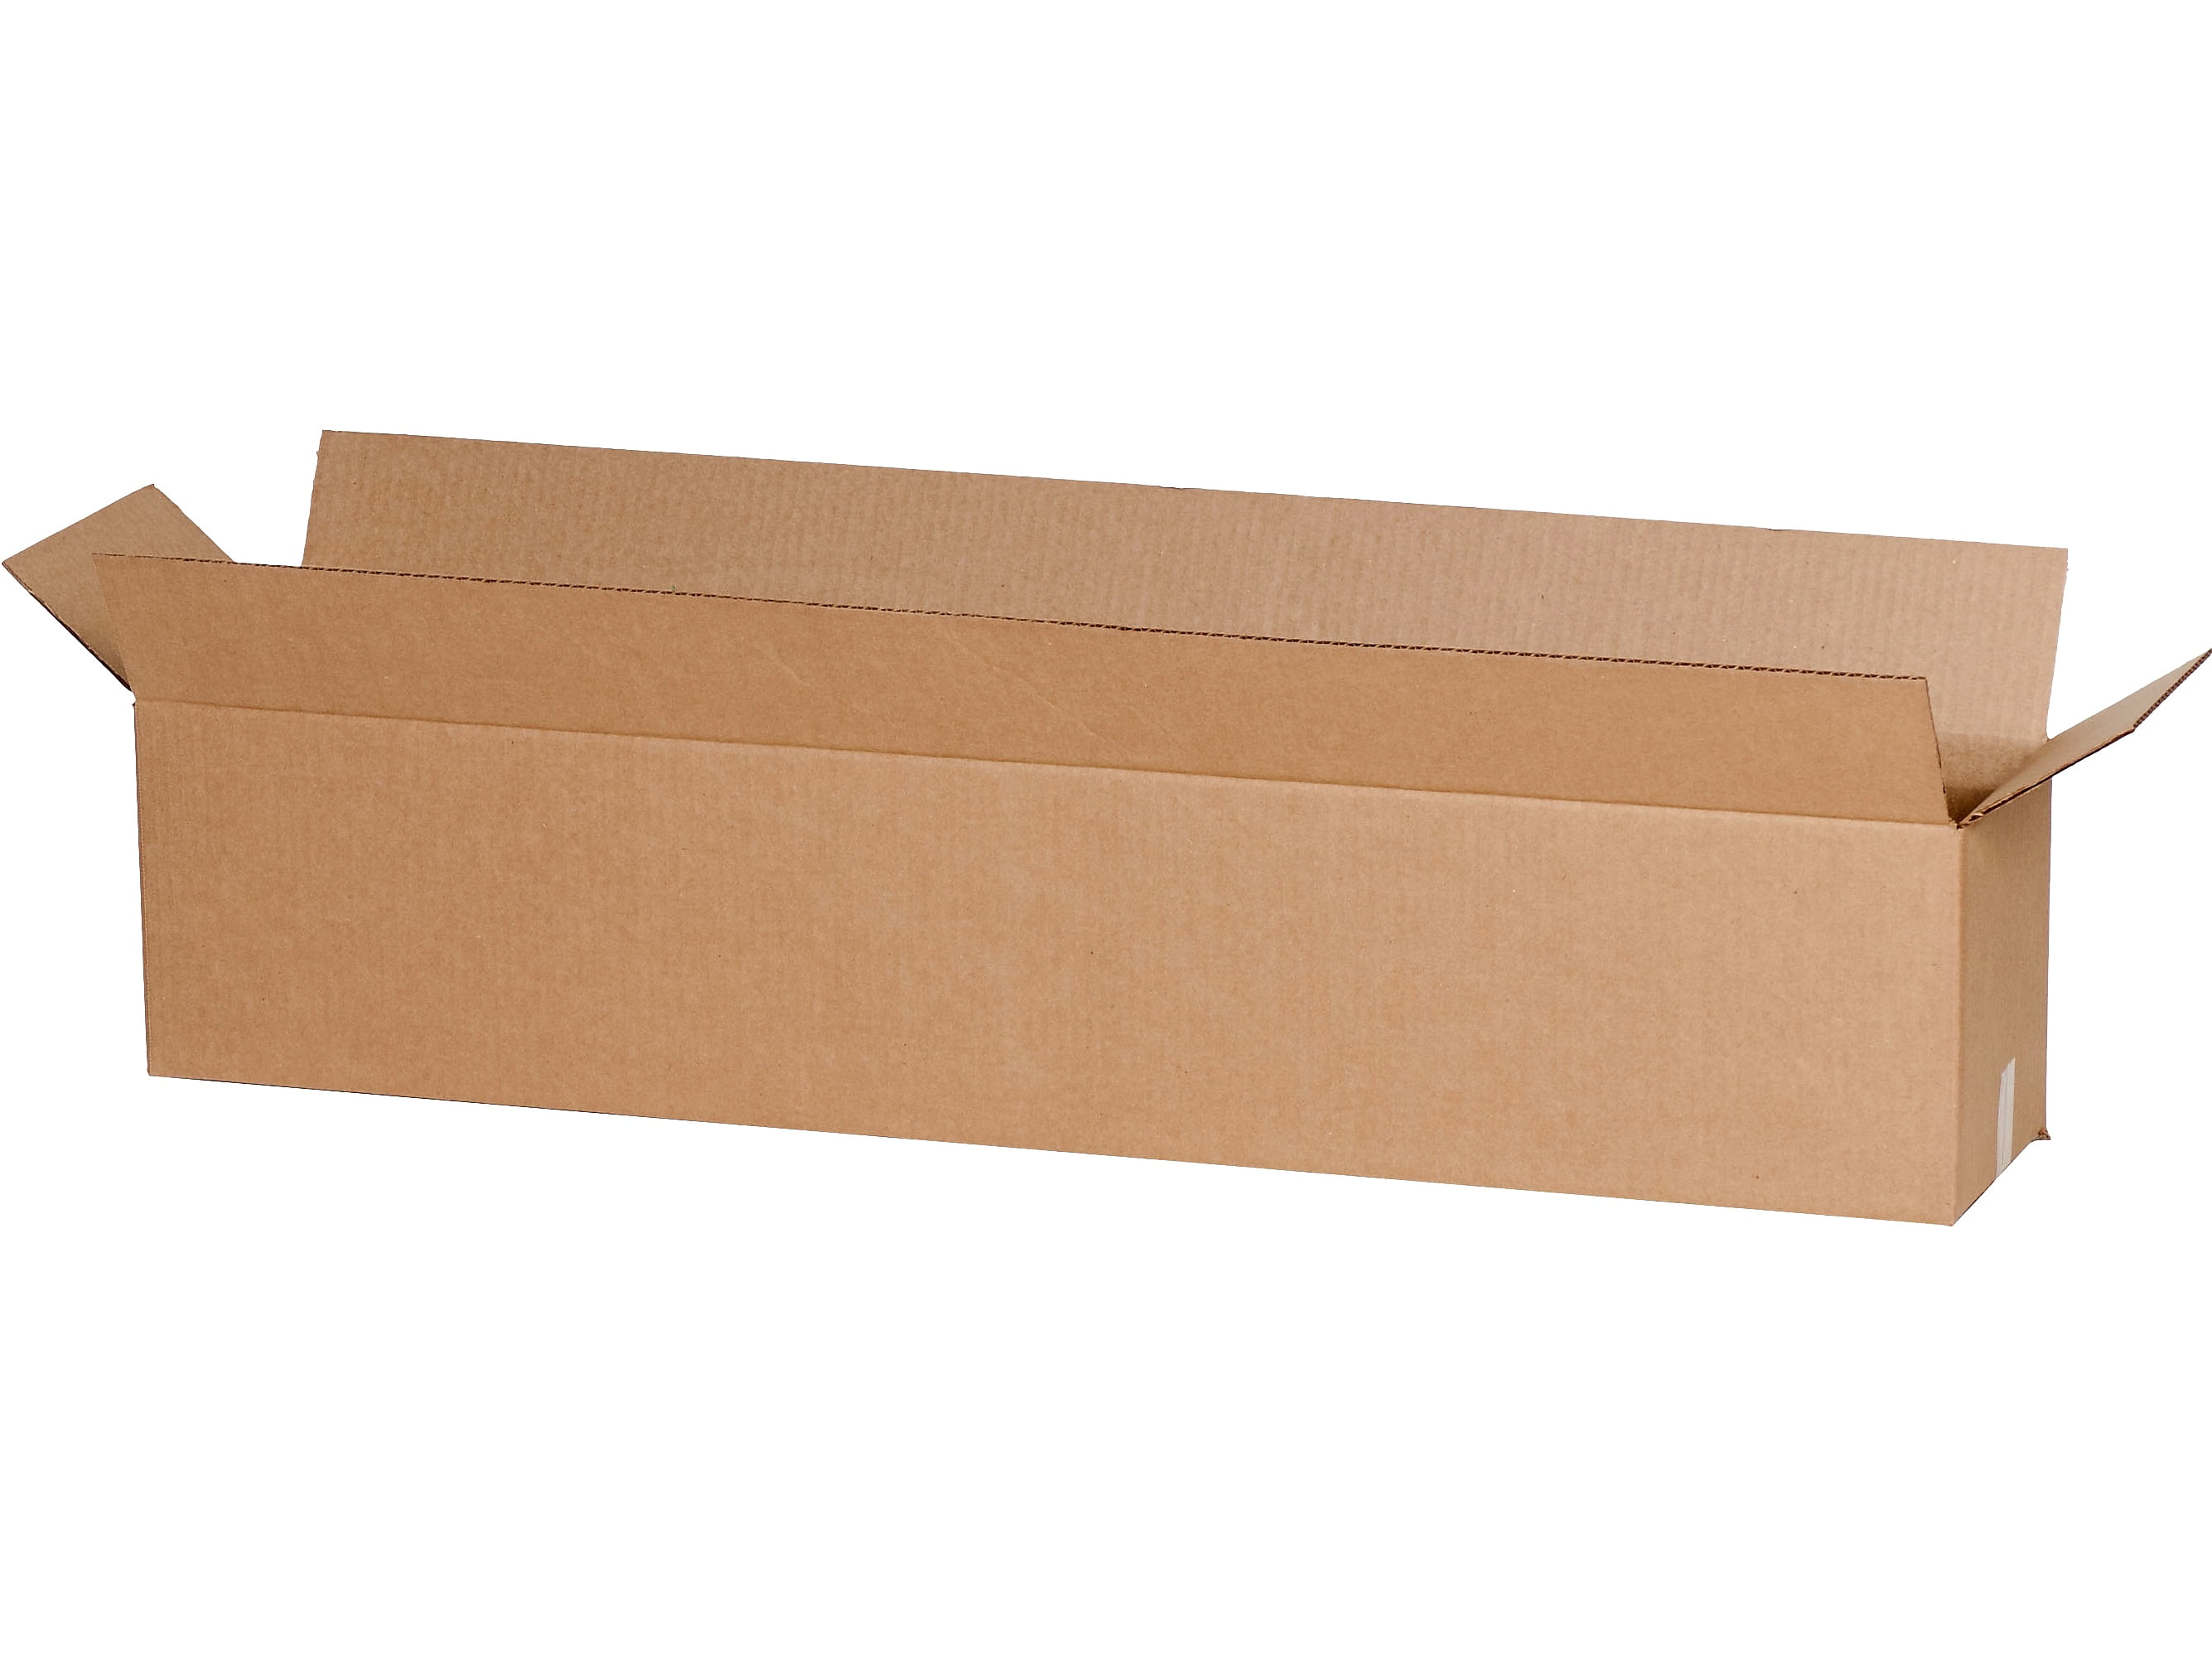 14 x 4 x 4" Kraft Corrugated Mailing/Shipping Boxes ECT-32B 50/Case 